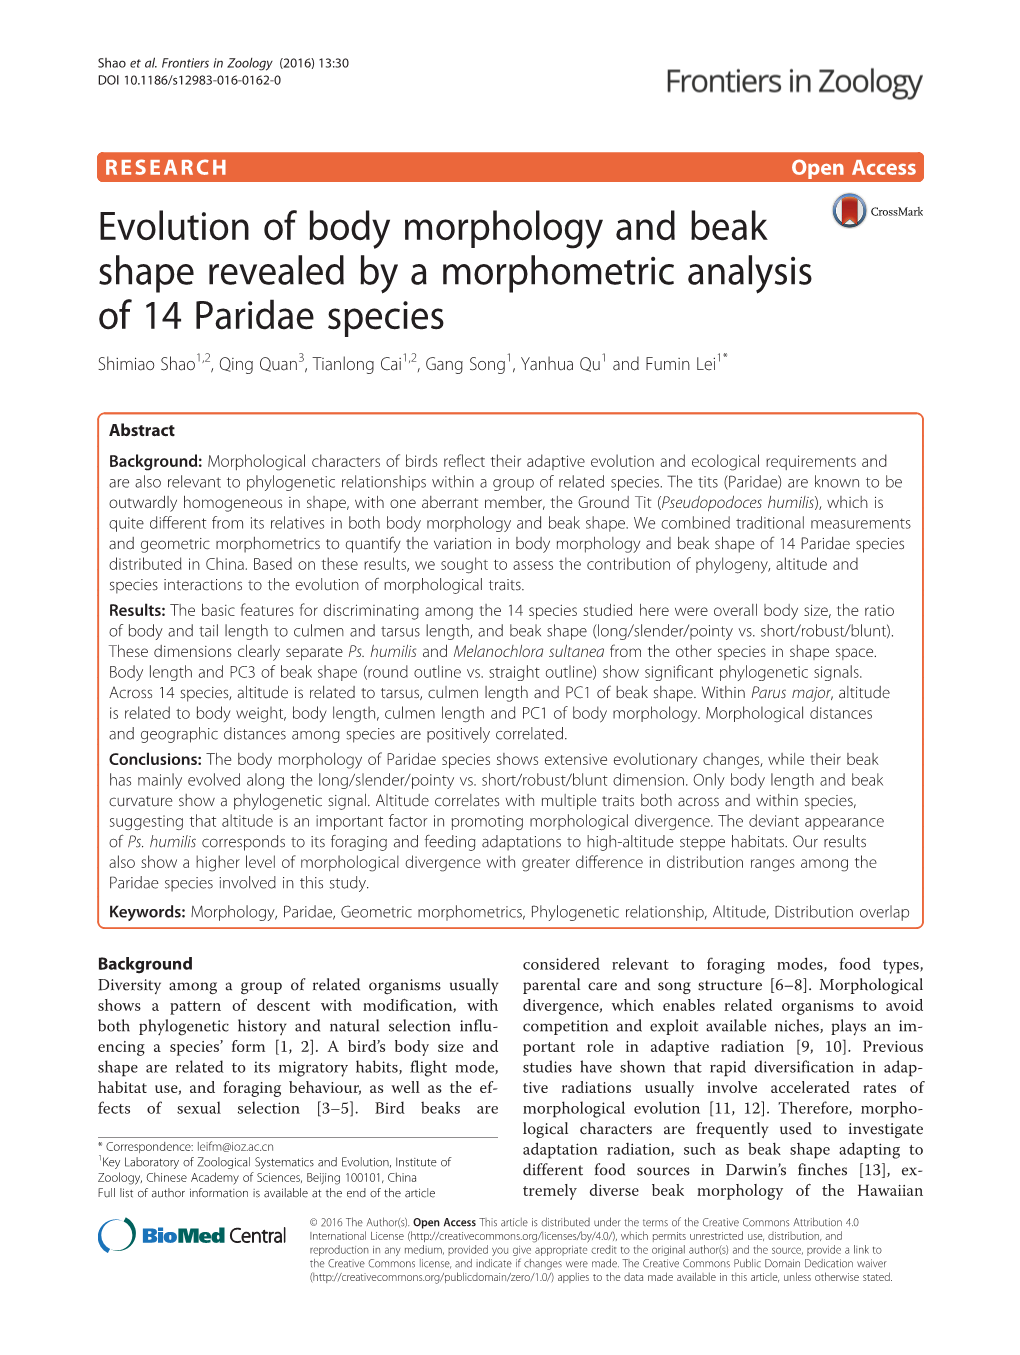 Evolution of Body Morphology and Beak Shape Revealed by A